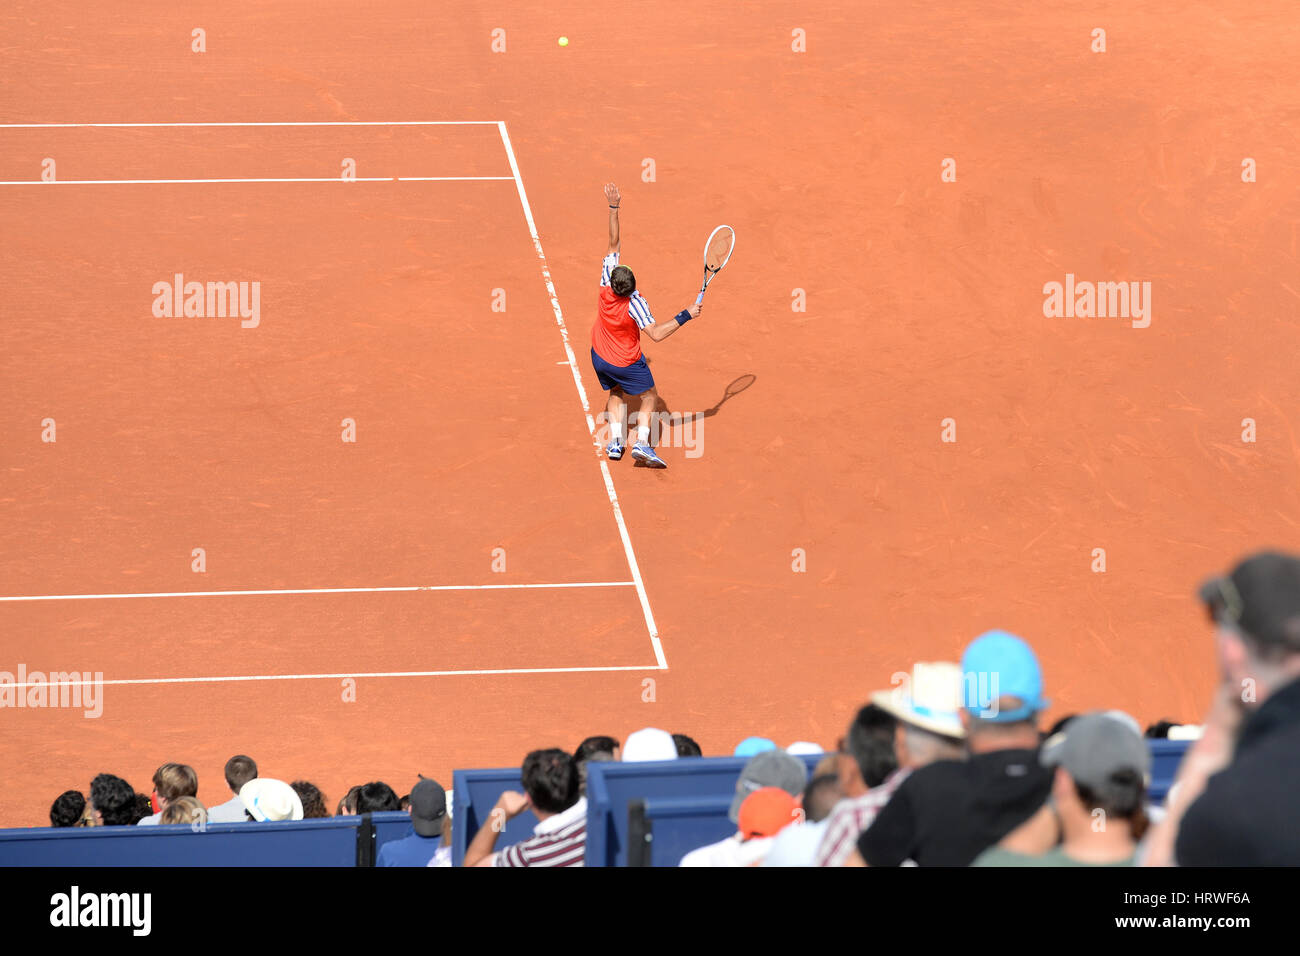 BARCELONA - 24 APR: Tommy Robredo (spanischer Tennisspieler) spielt bei der ATP Barcelona Open Banc Sabadell Conde de Godo-Turnier am 24. April 2015 in Stockfoto